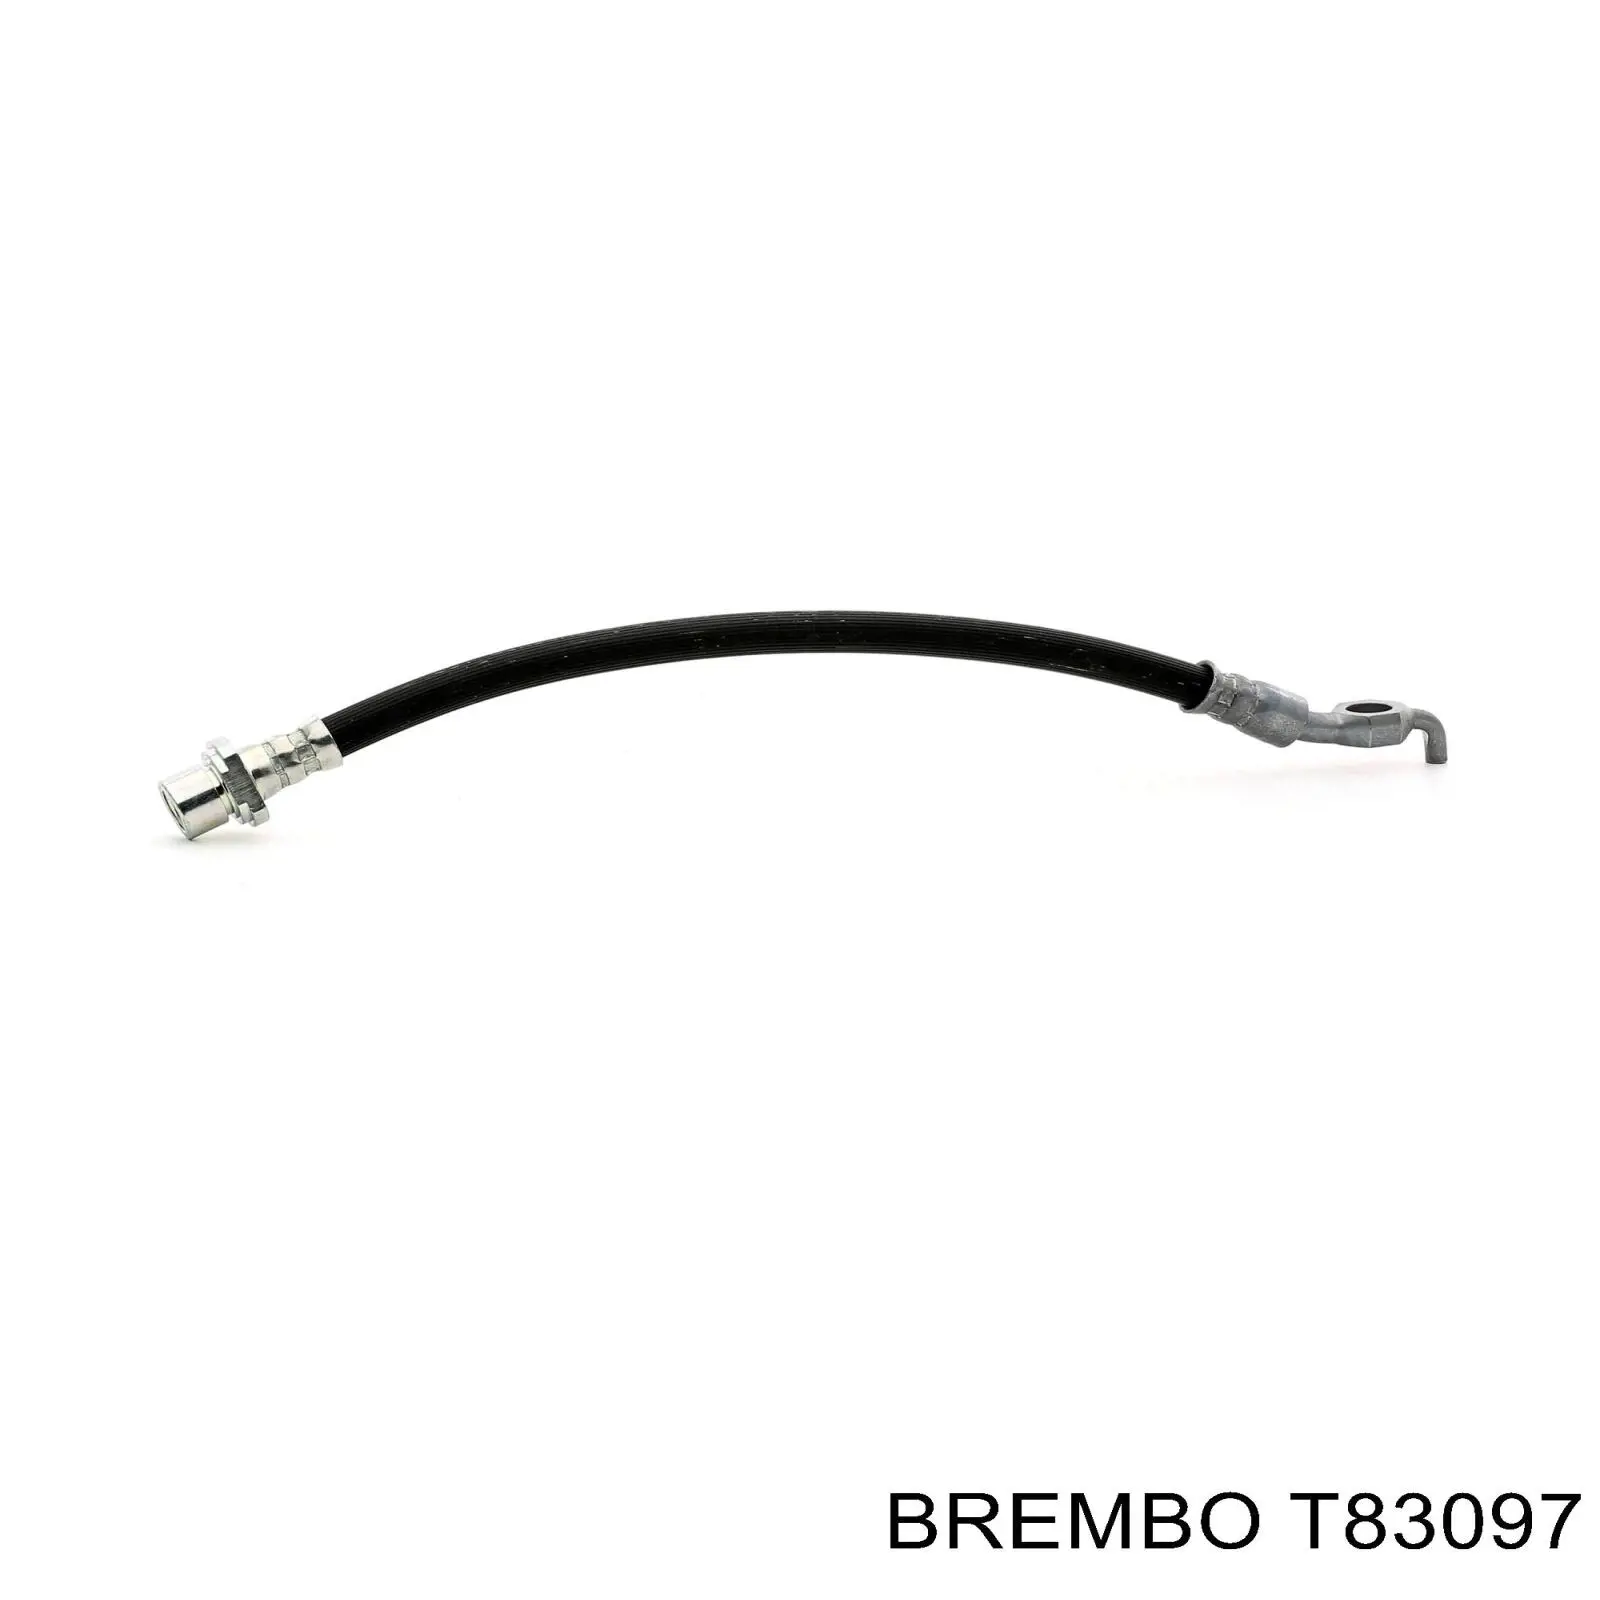 Tubo flexible de frenos trasero T83097 Brembo